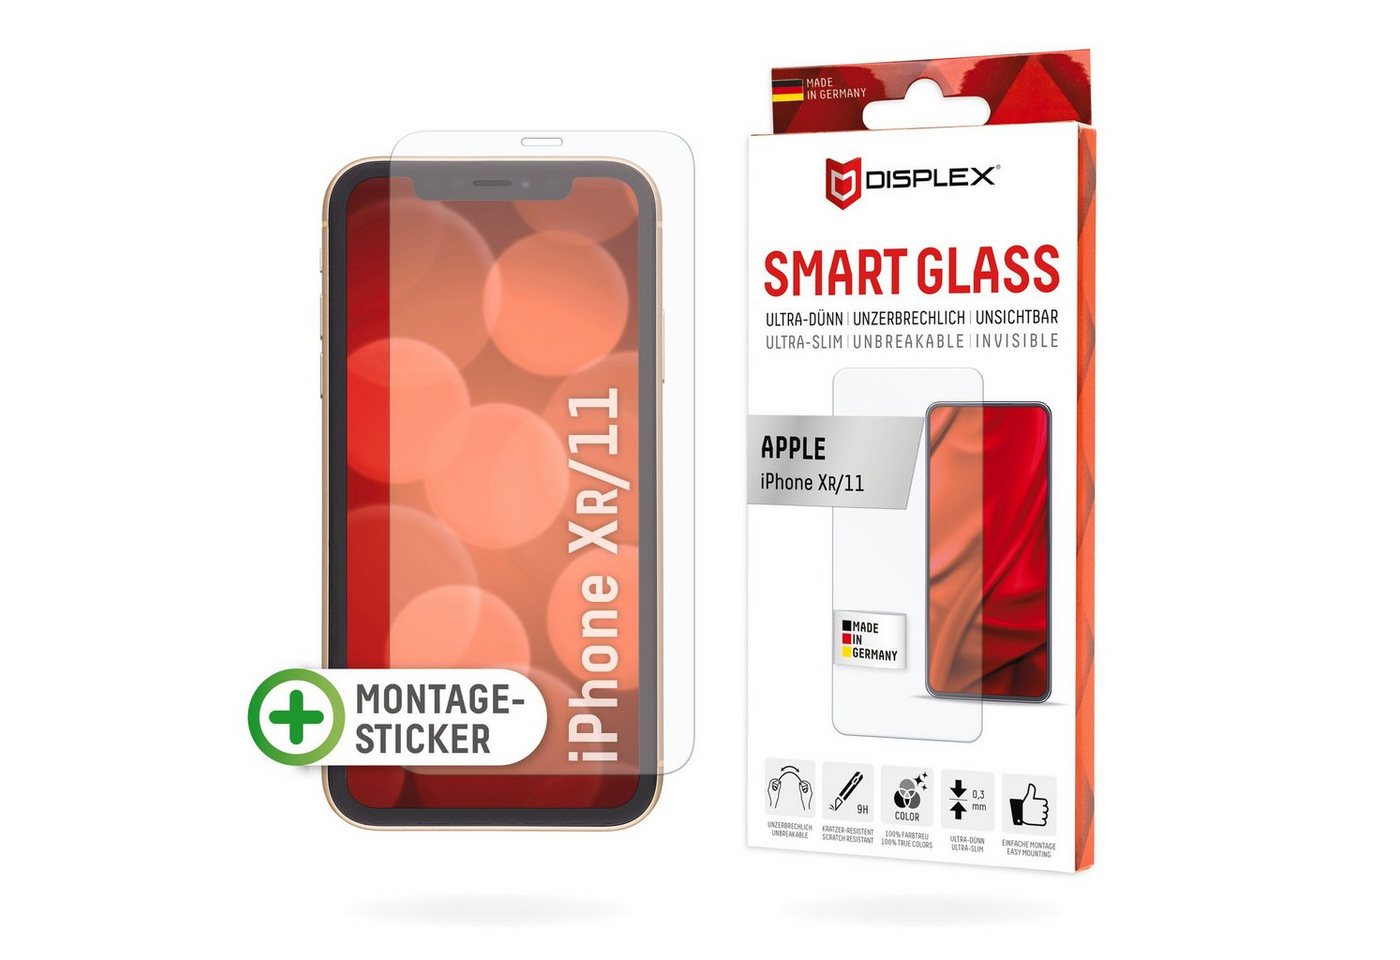 Displex Smart Glass - Apple iPhone XR/11, Displayschutzglas von Displex